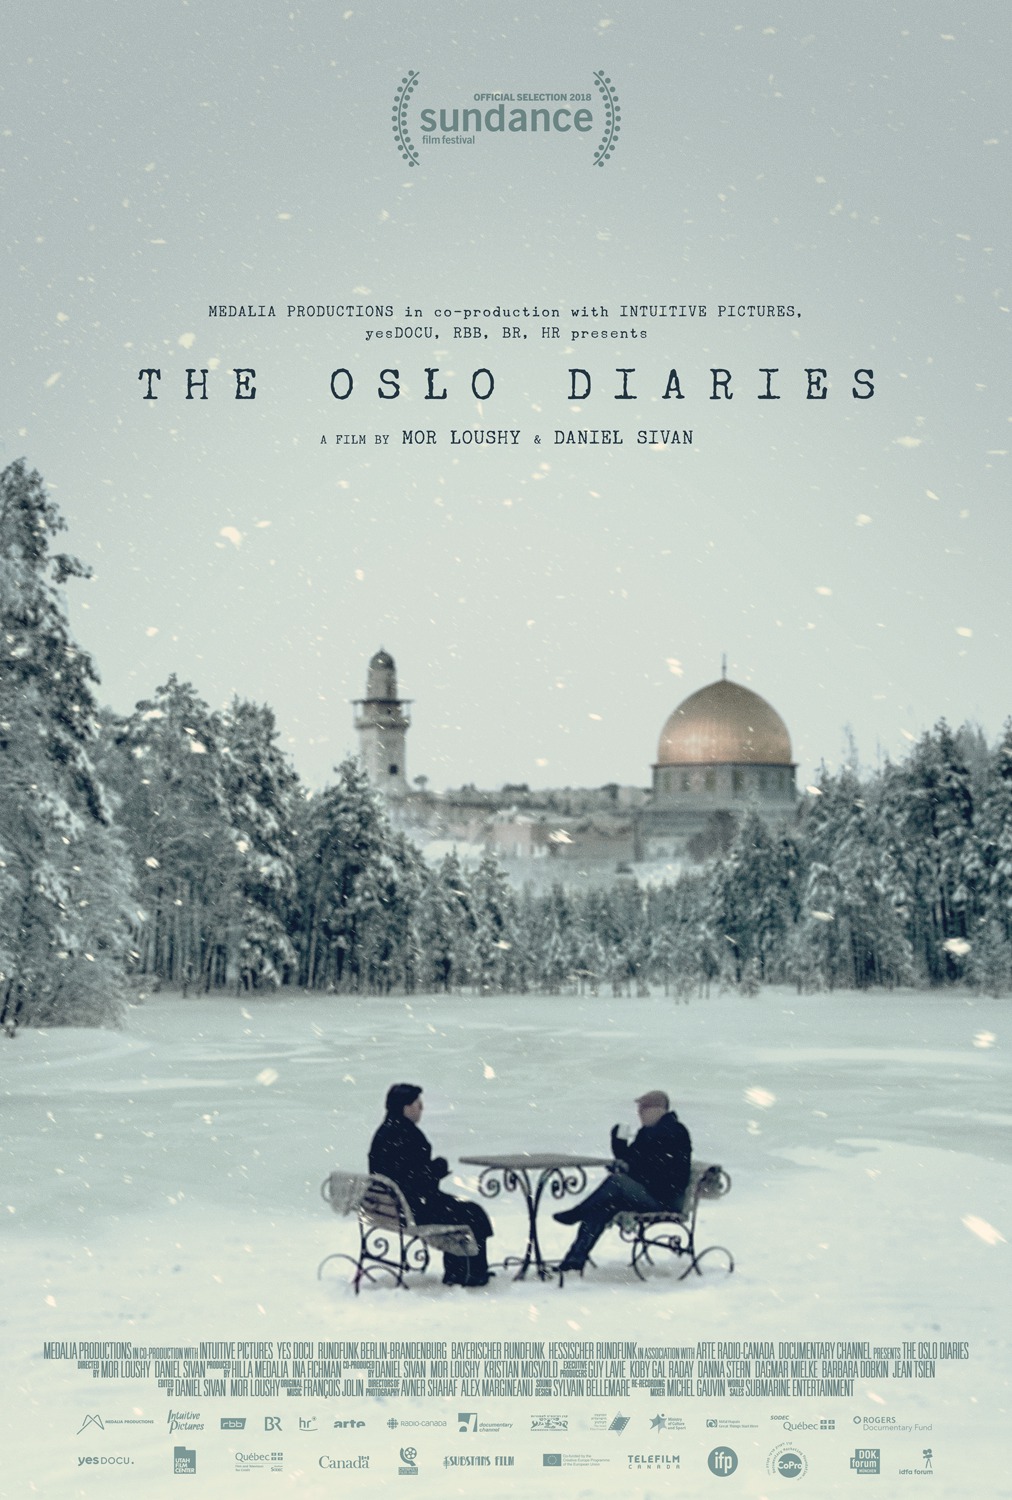 Nonton film The Oslo Diaries layarkaca21 indoxx1 ganool online streaming terbaru